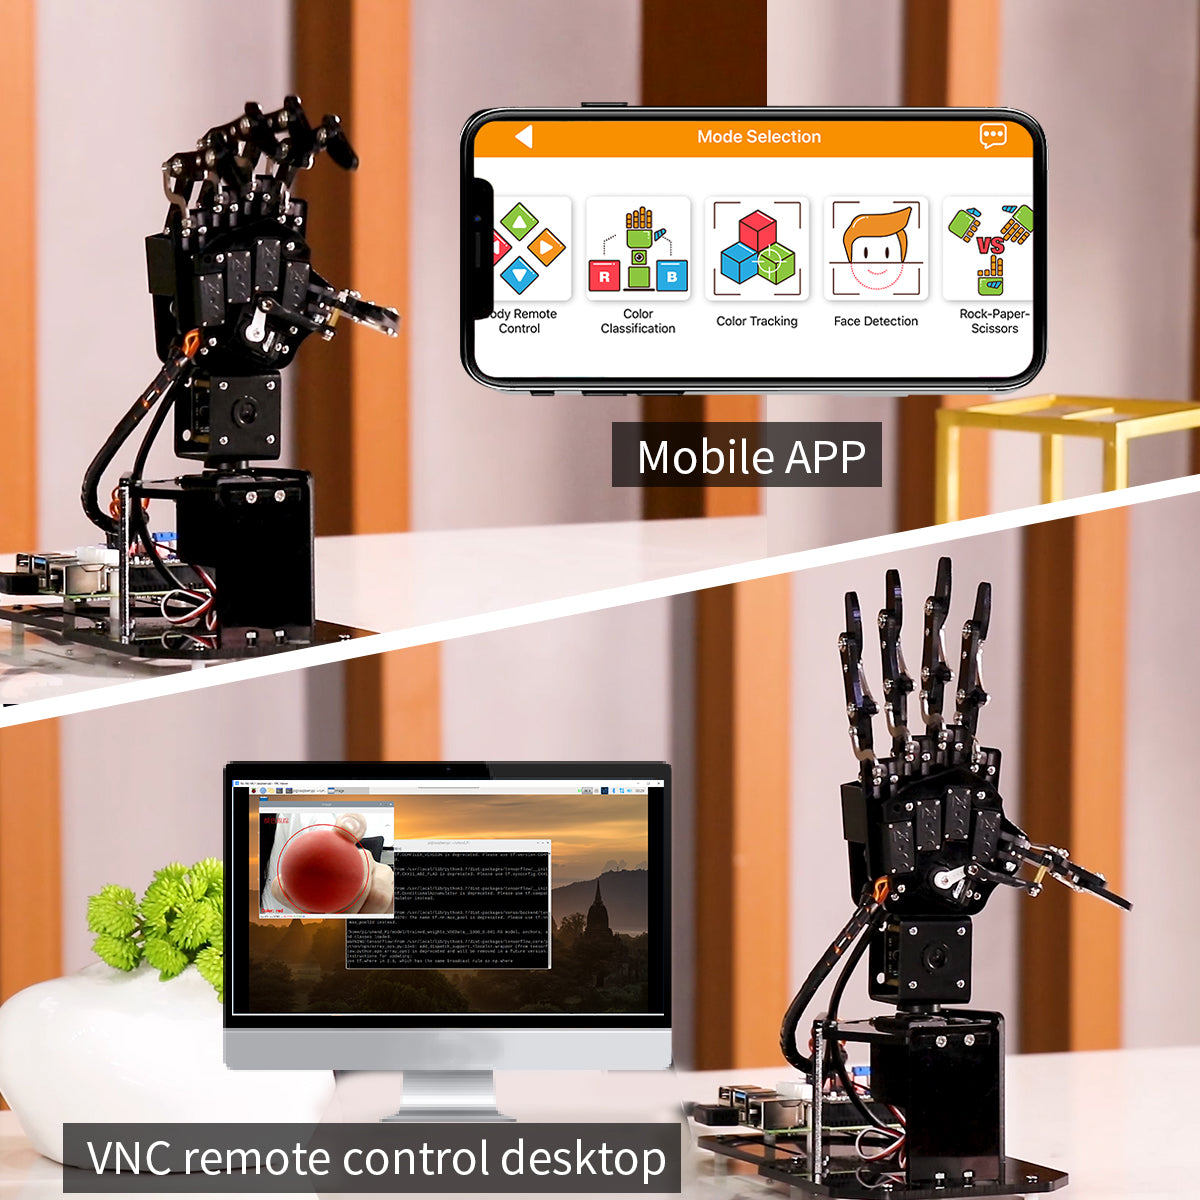 Hiwonder uHandPi Raspberry Pi Robotic Hand AI Vision Python Programming